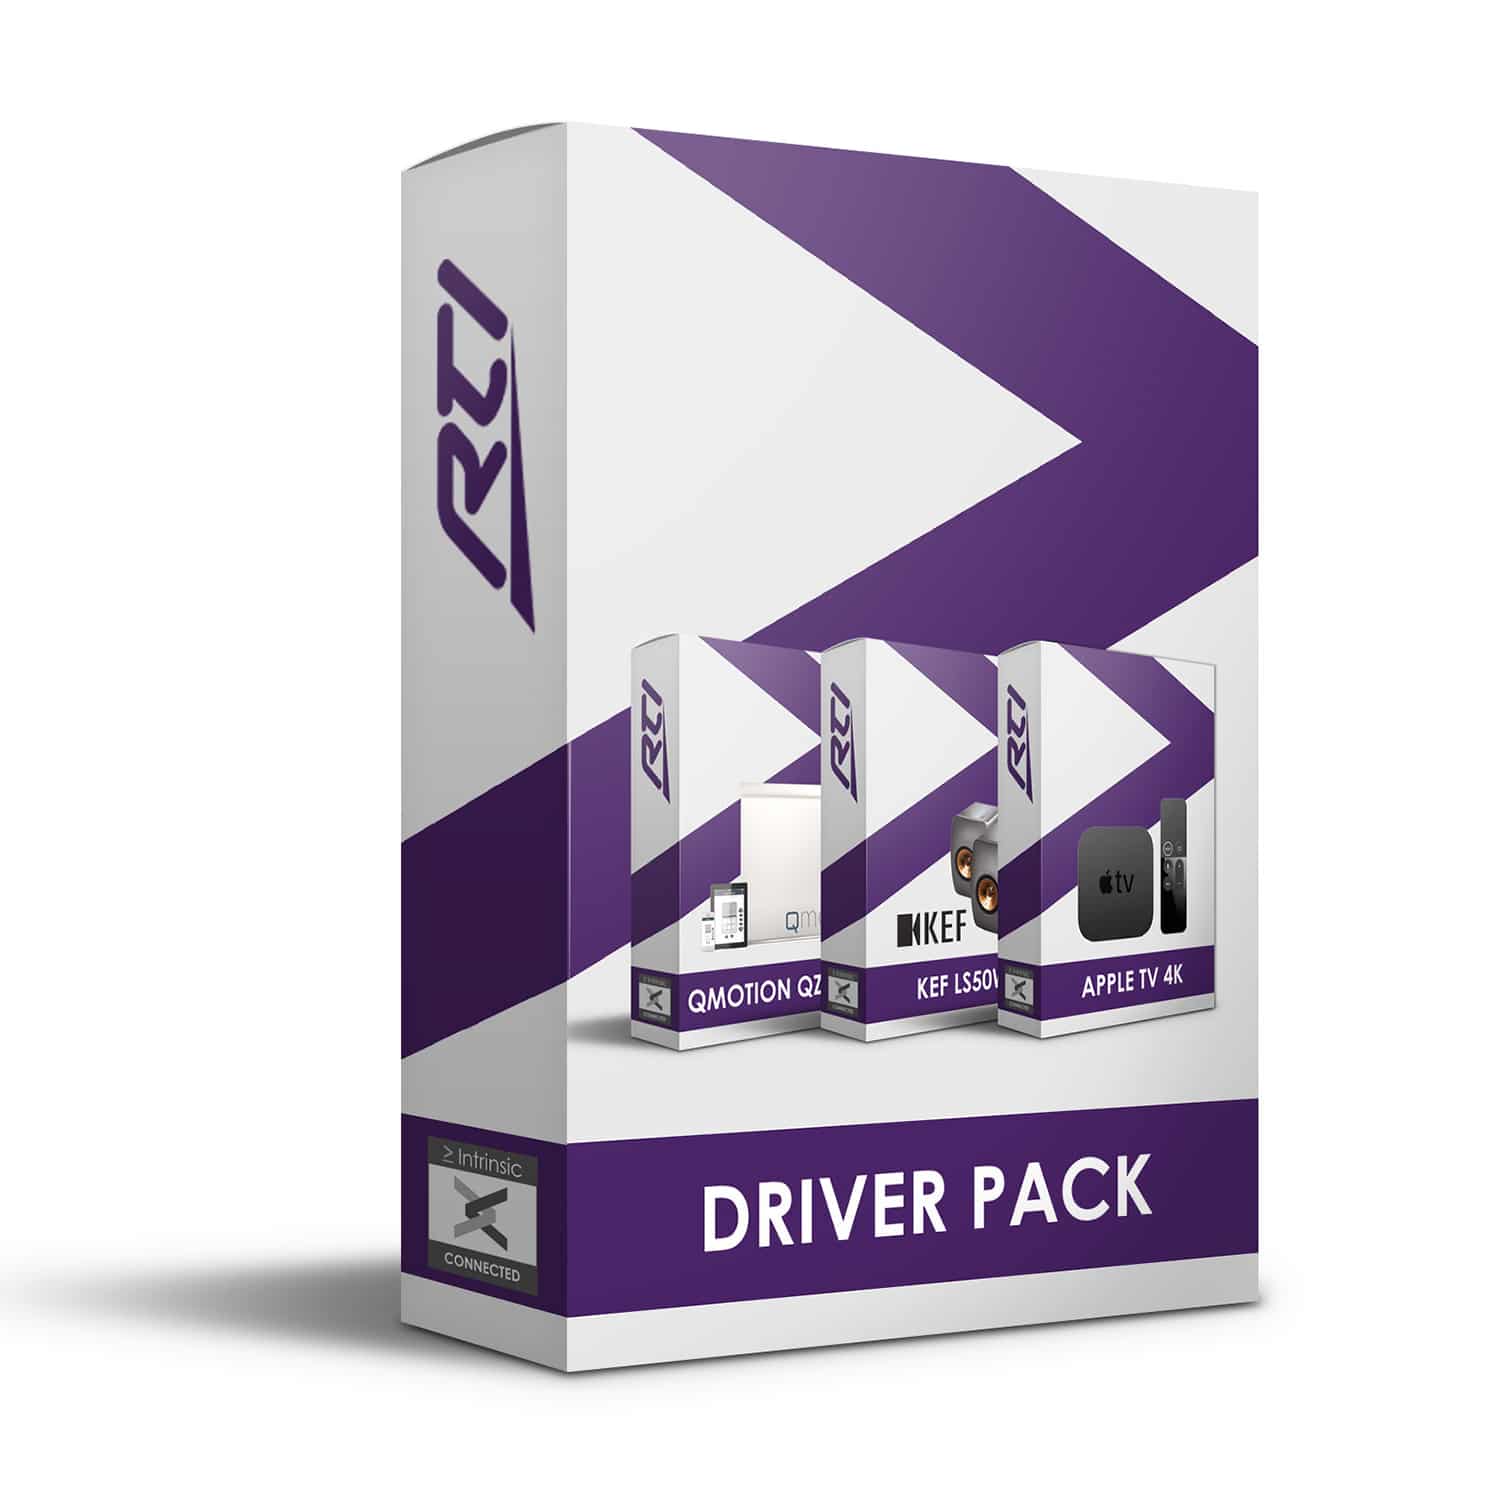 Intrinsic RTI Driver Pack